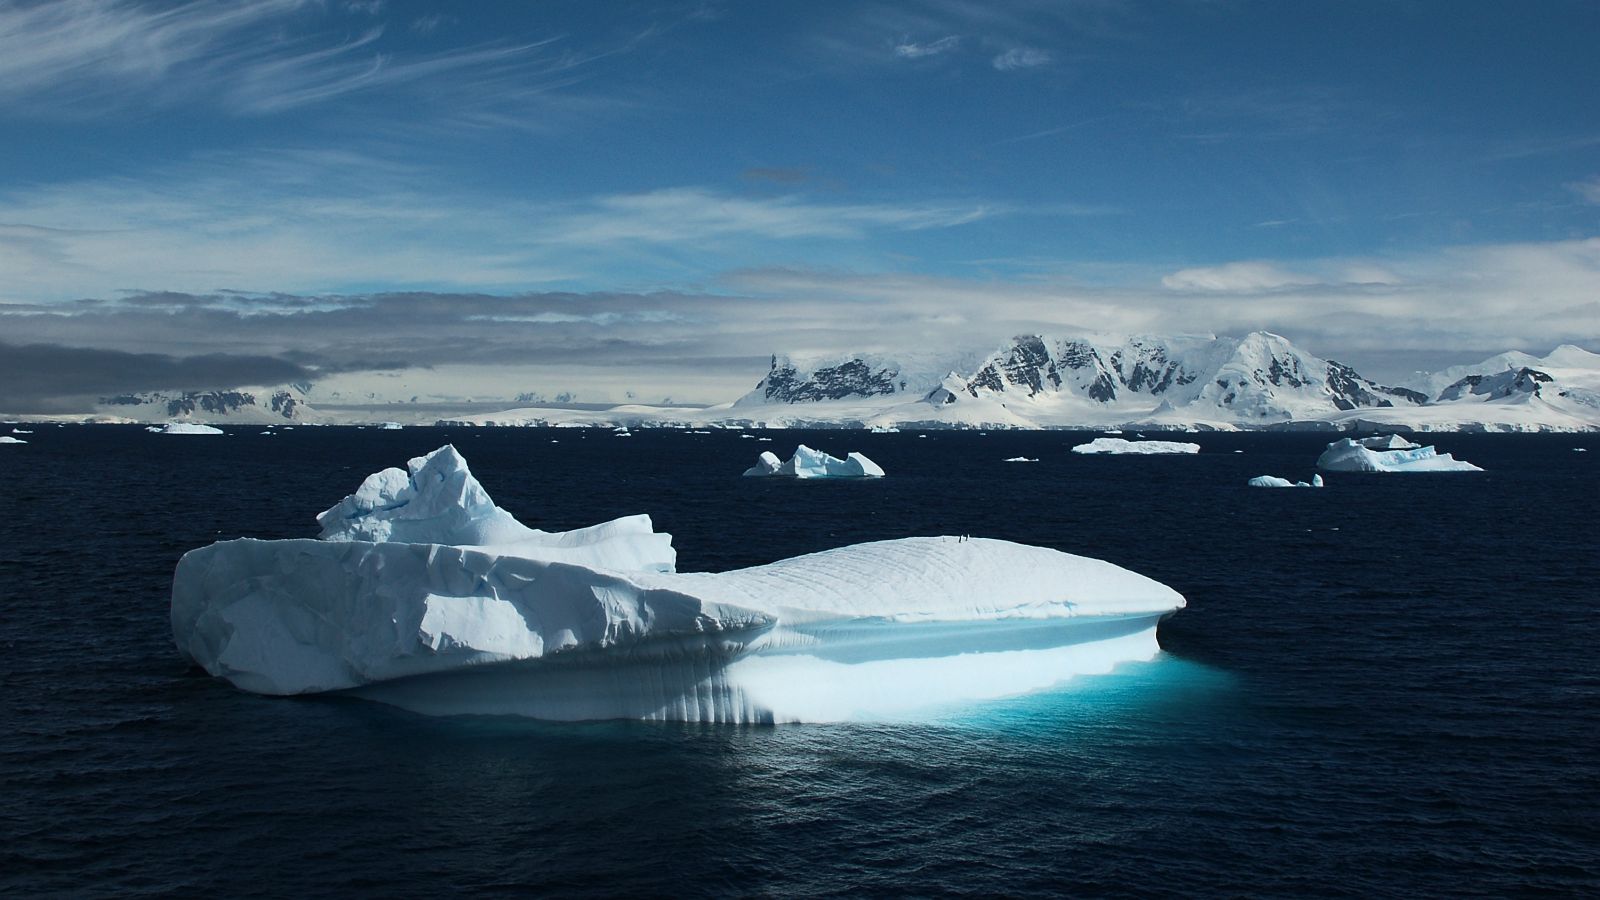 Ice berg drifts in the Antarctic ocean